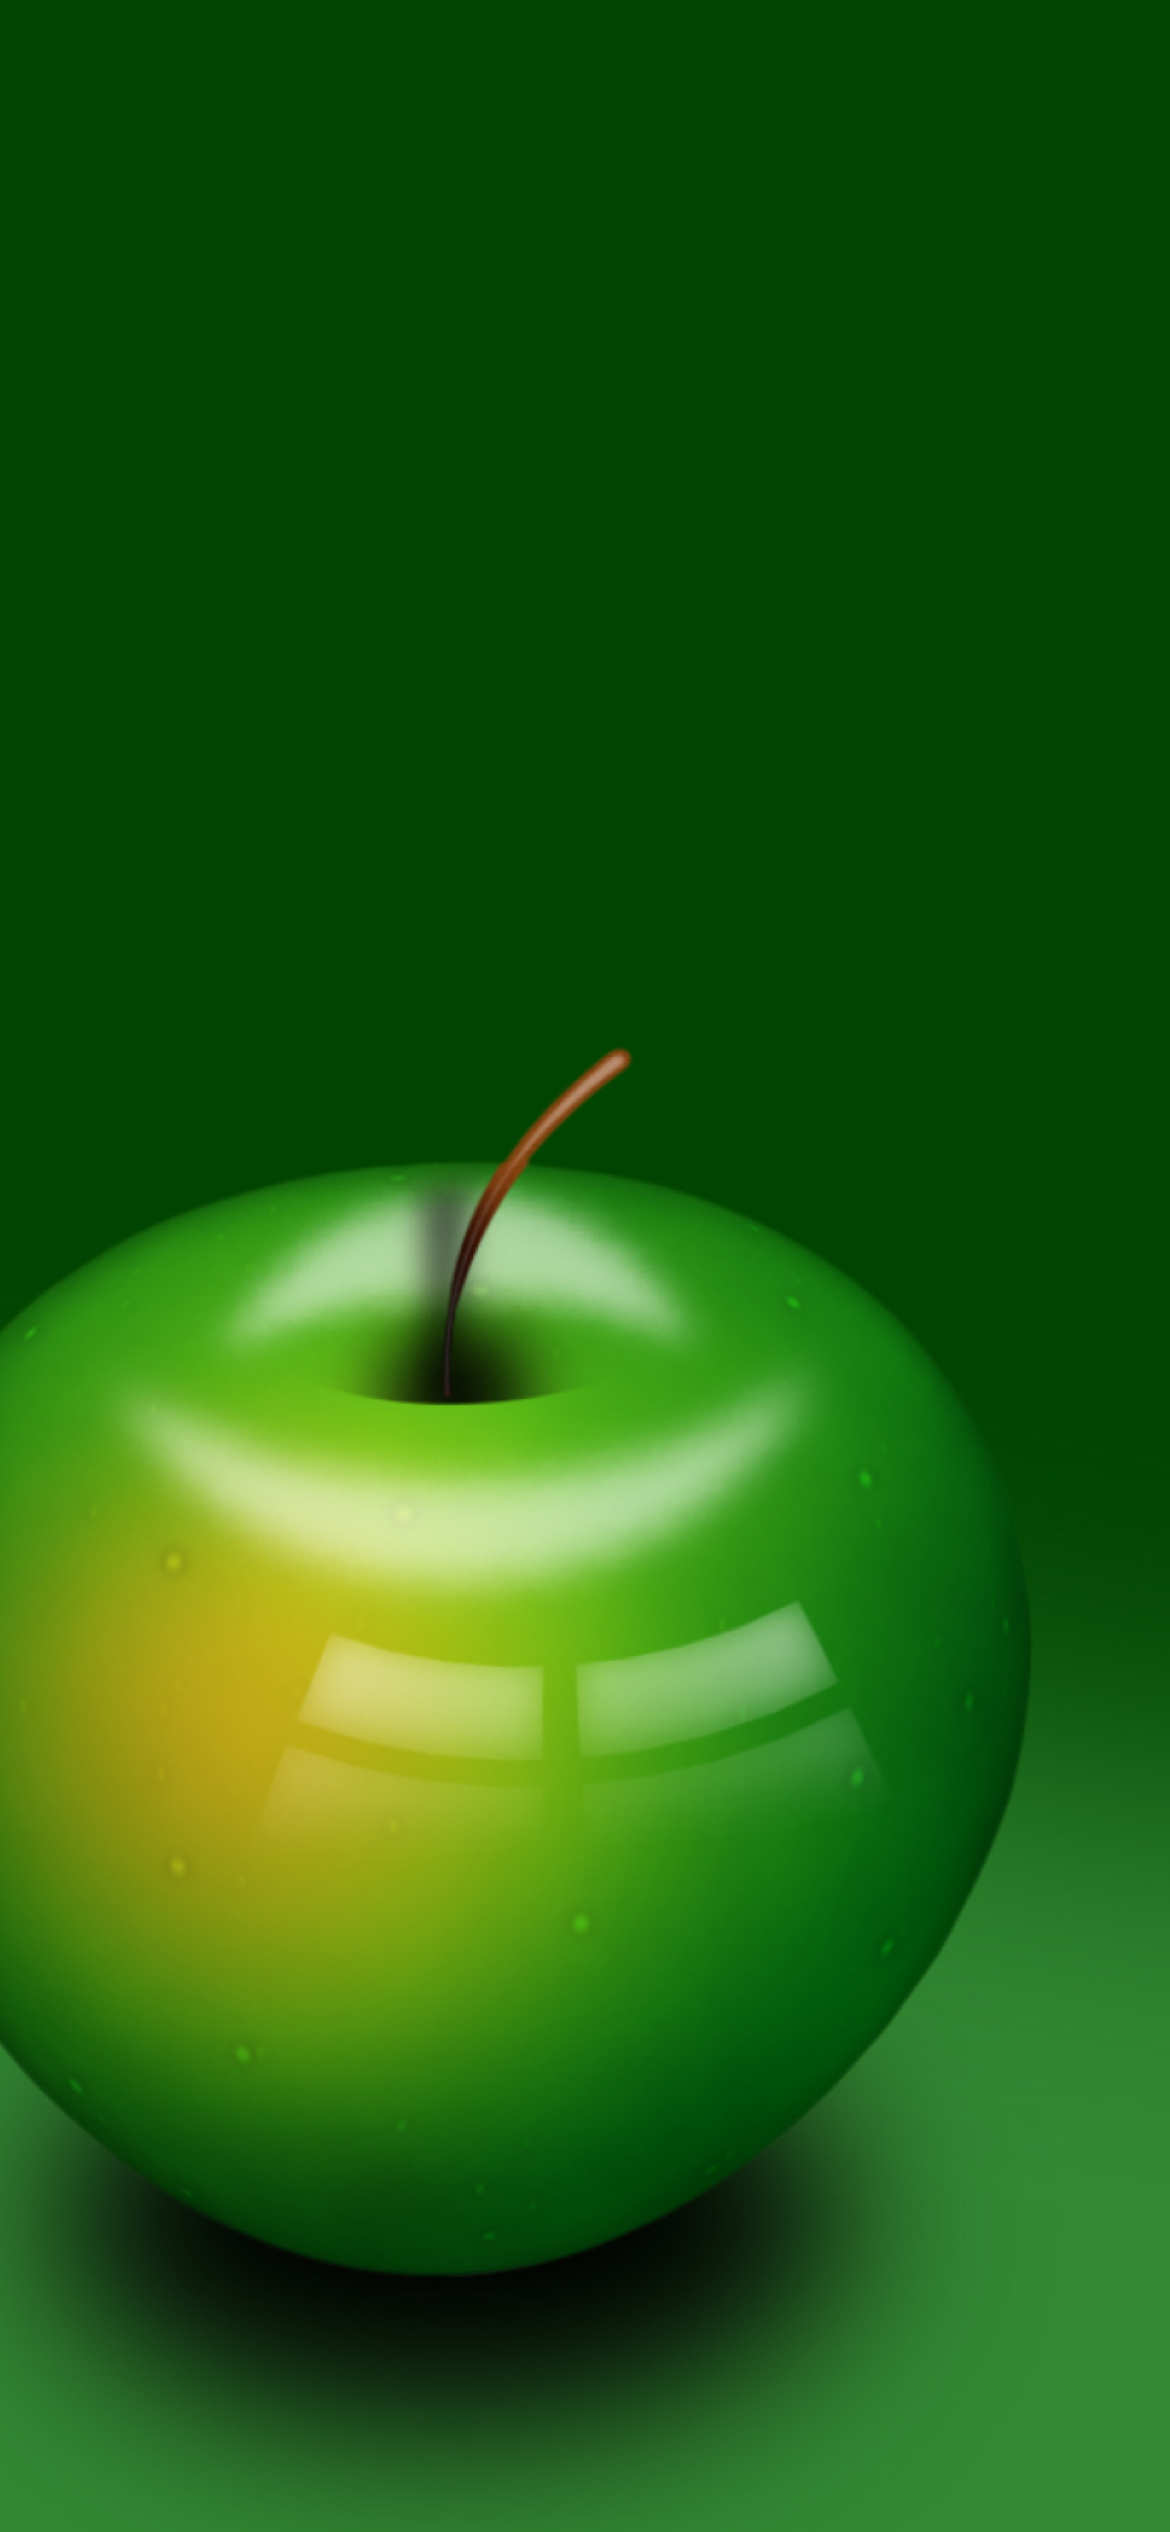 Green Apple wallpaper 1170x2532